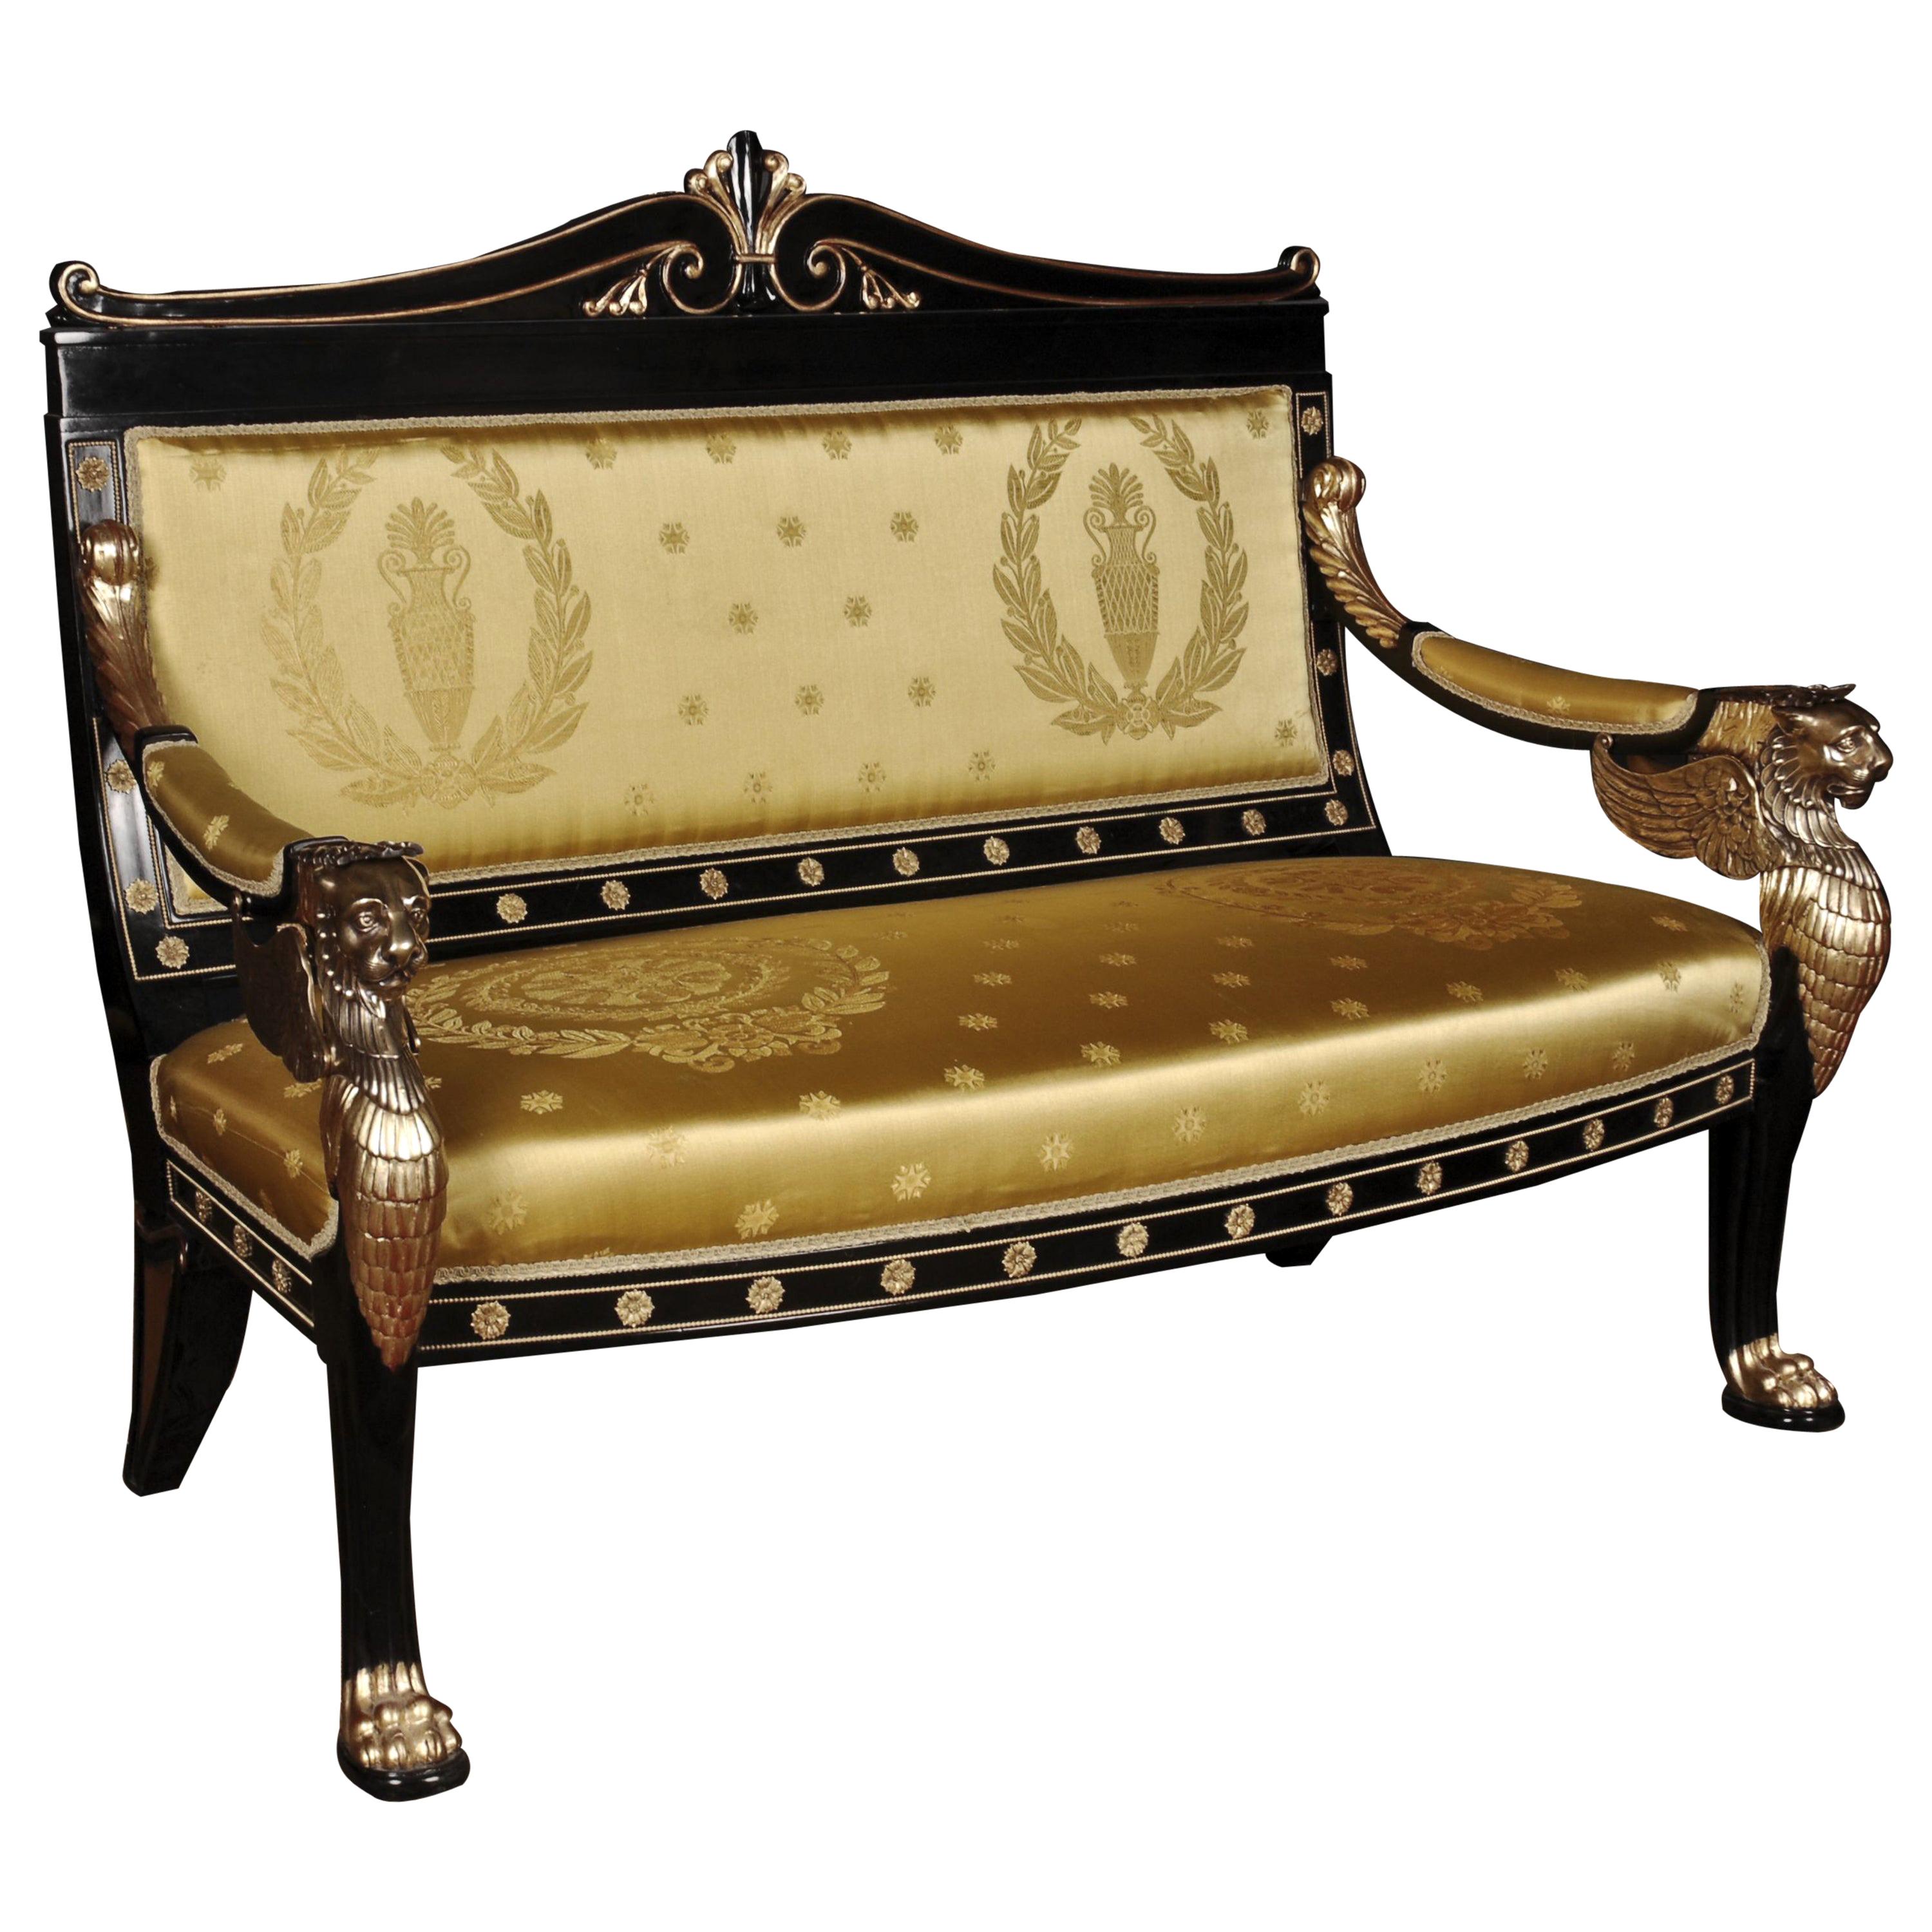 20th Century Empire Style Lion Kanapee Sofa For Sale